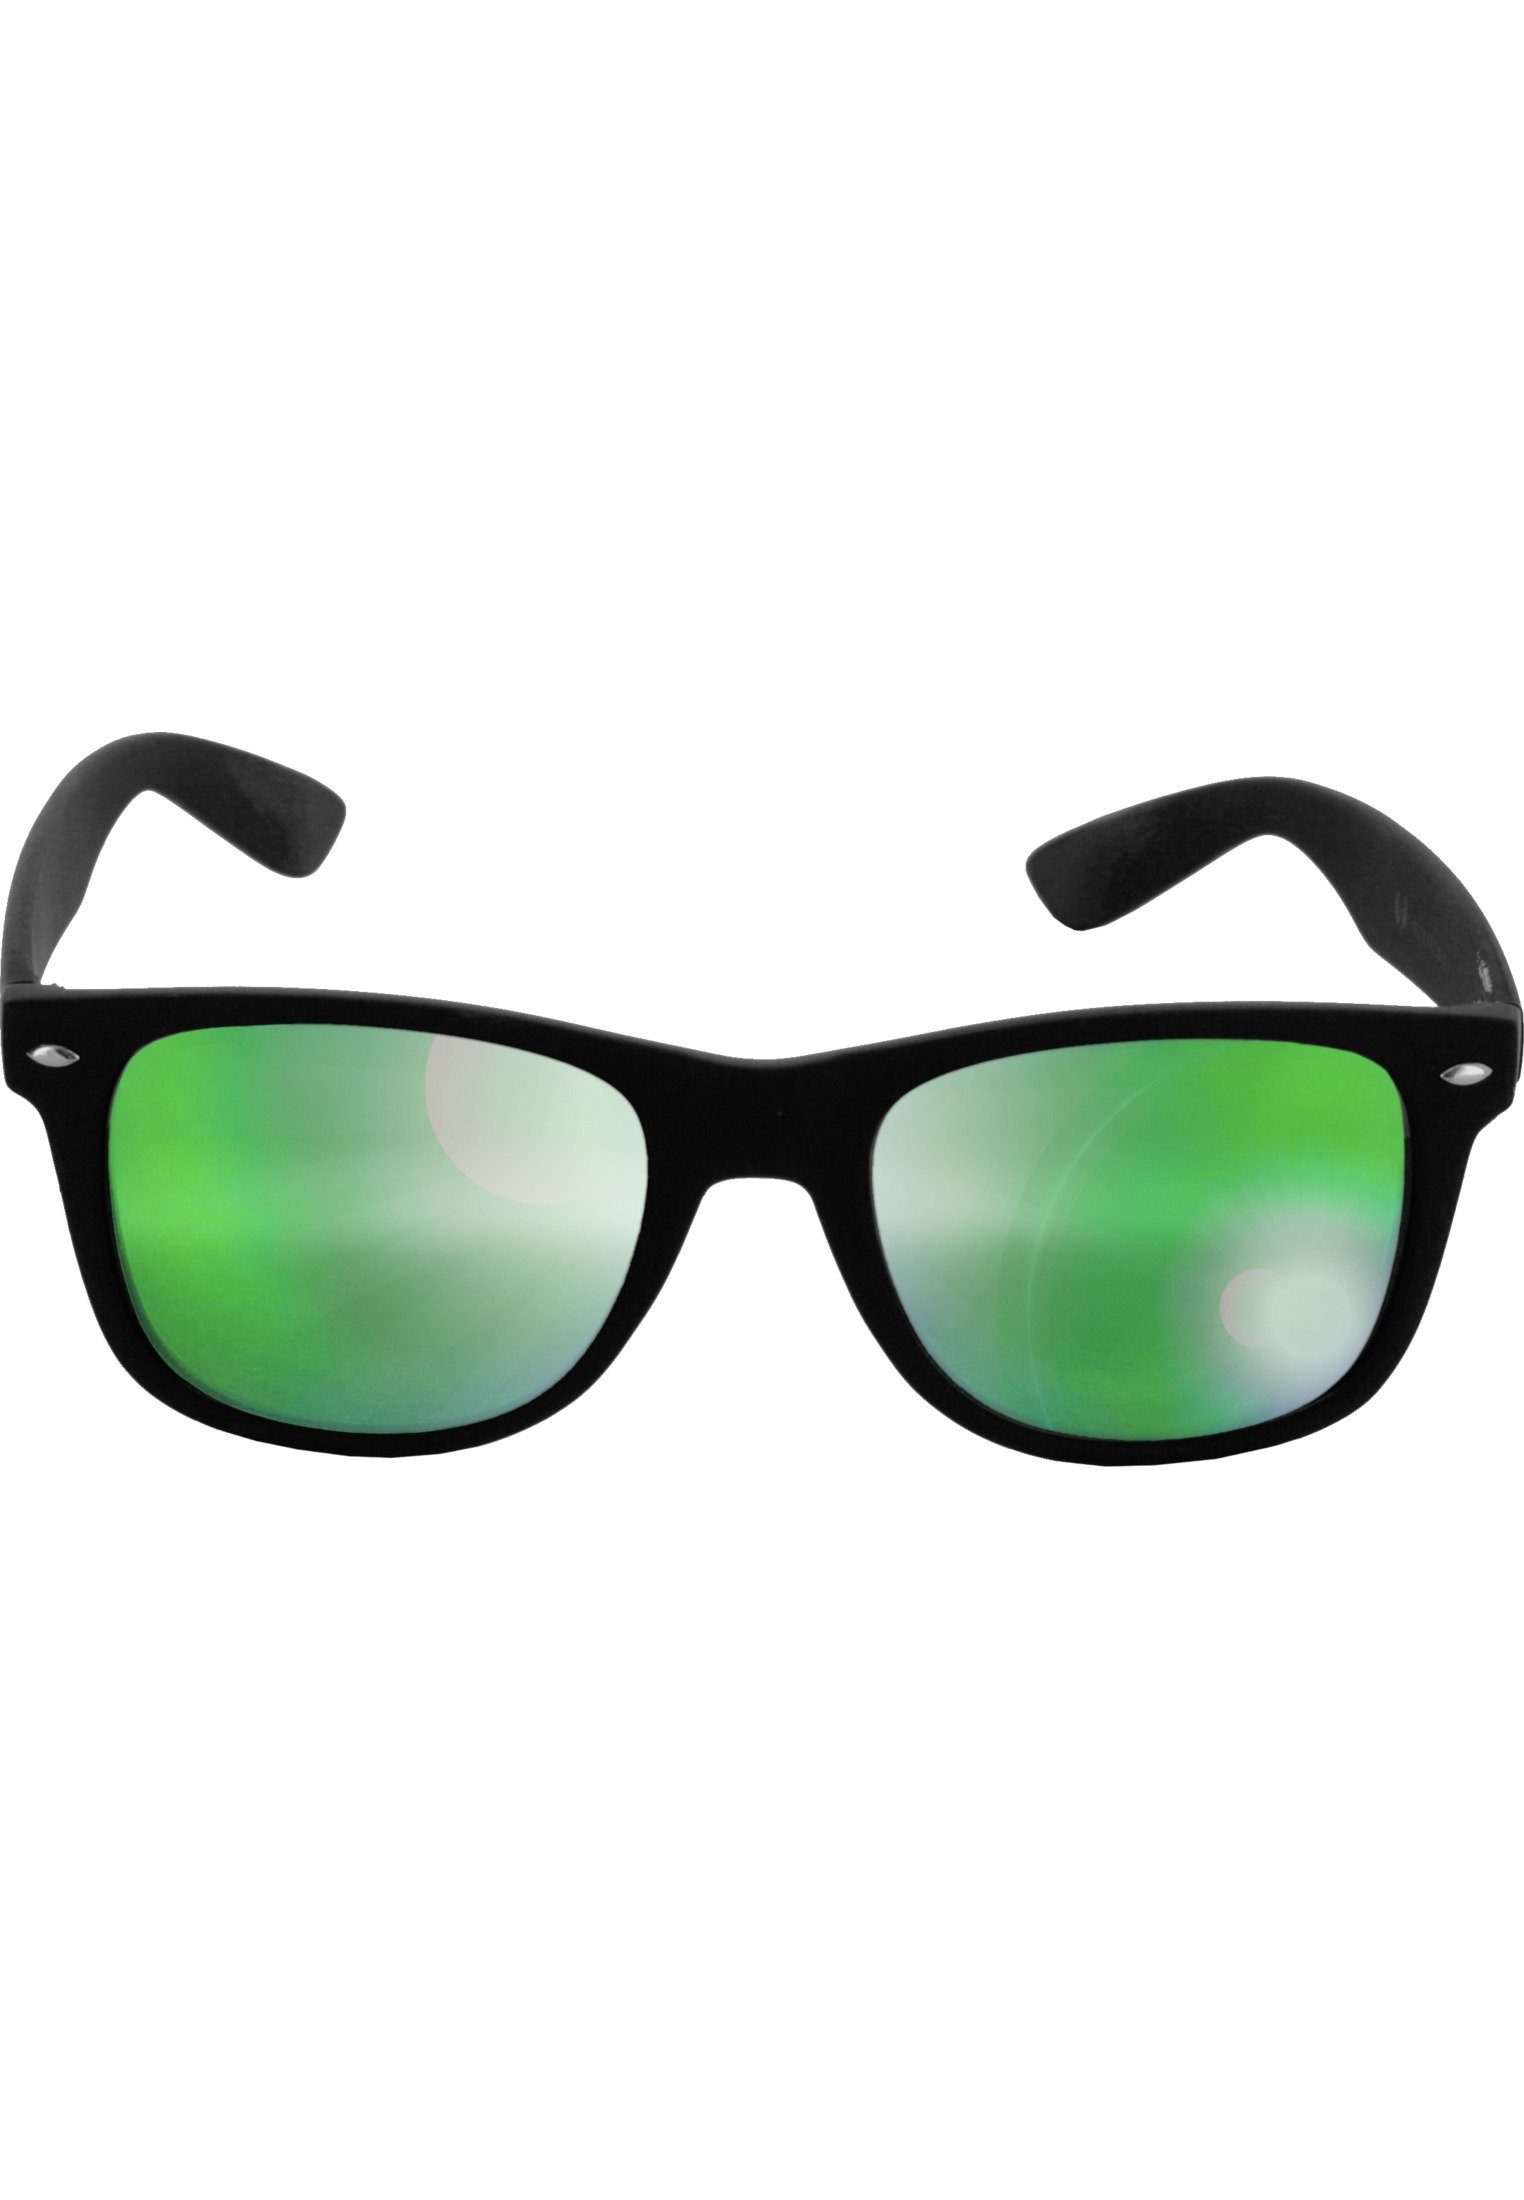 Sonnenbrille MSTRDS Accessoires Sunglasses Likoma Mirror blk/grn